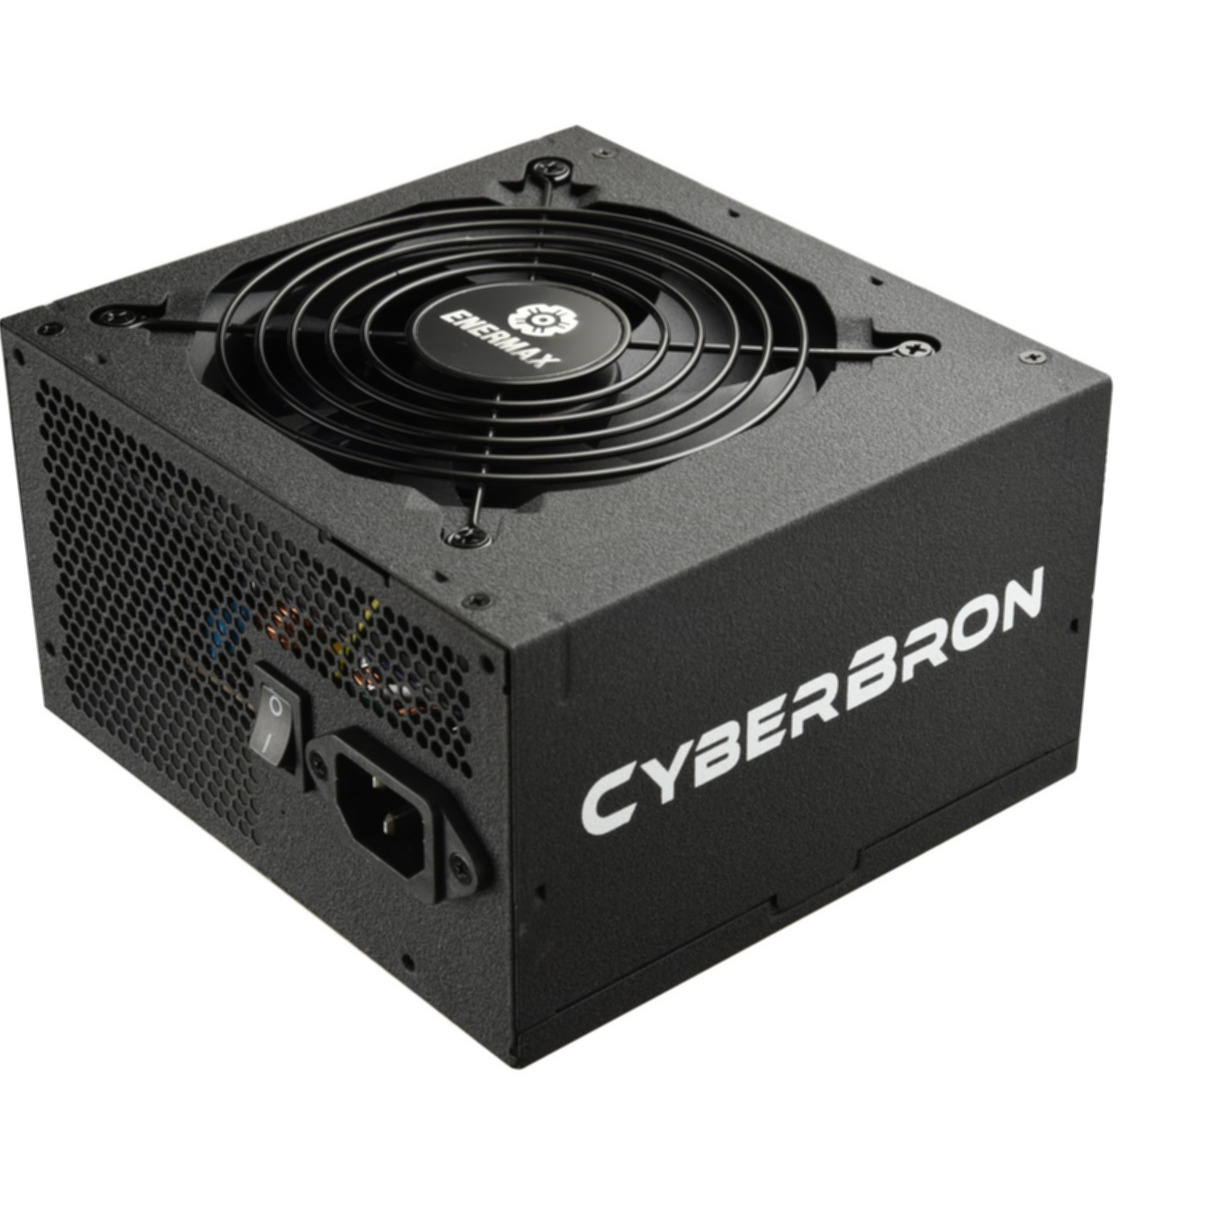 CyberBron Watt Netzteil ENERMAX PC 700